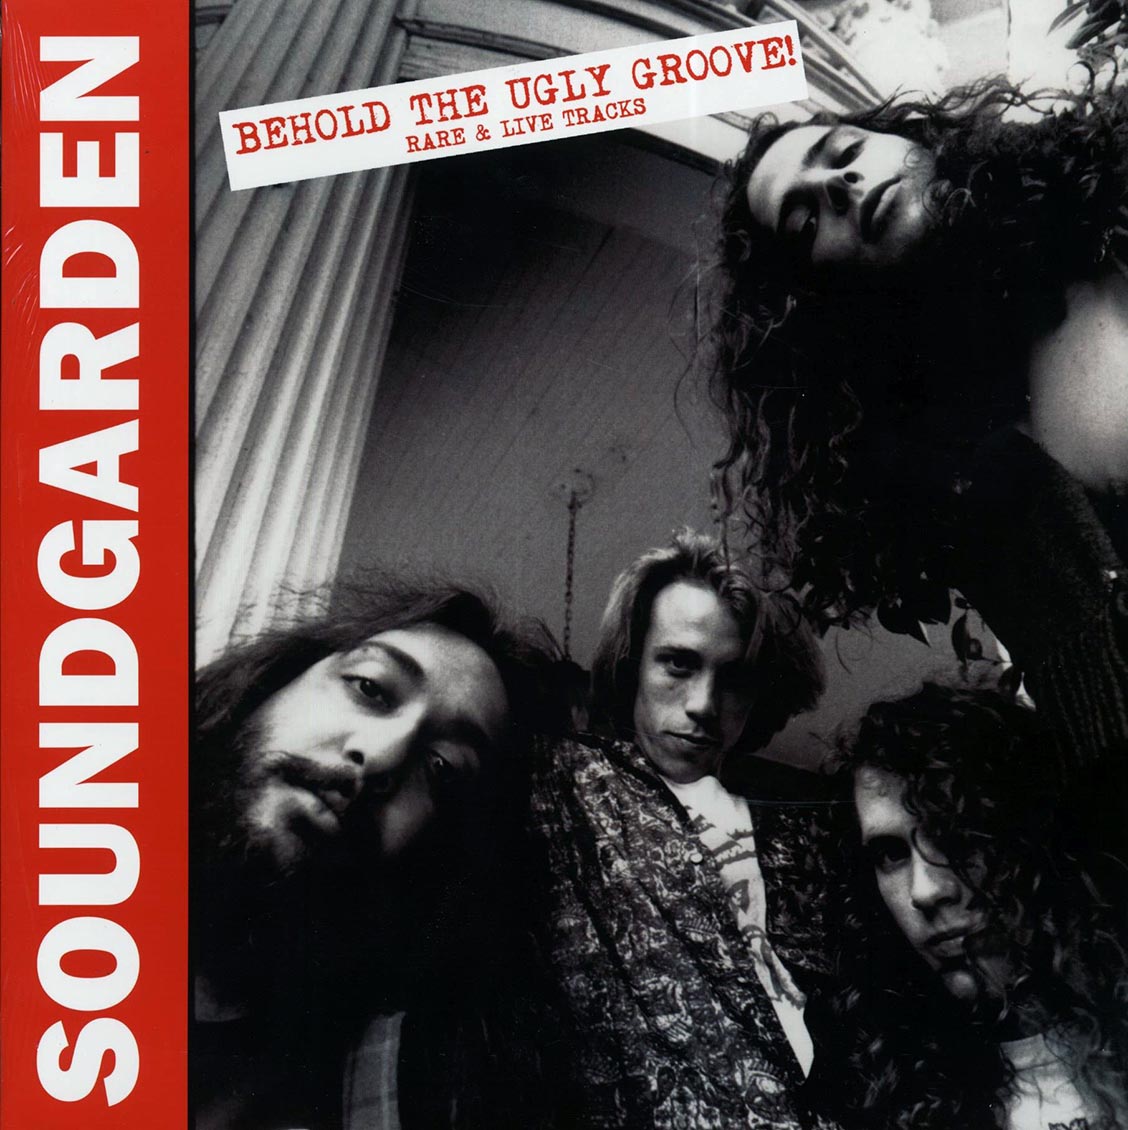 Soundgarden - Beyond The Ugly Groove! Rare & Live Tracks (ltd. 500 copies made) - Vinyl LP